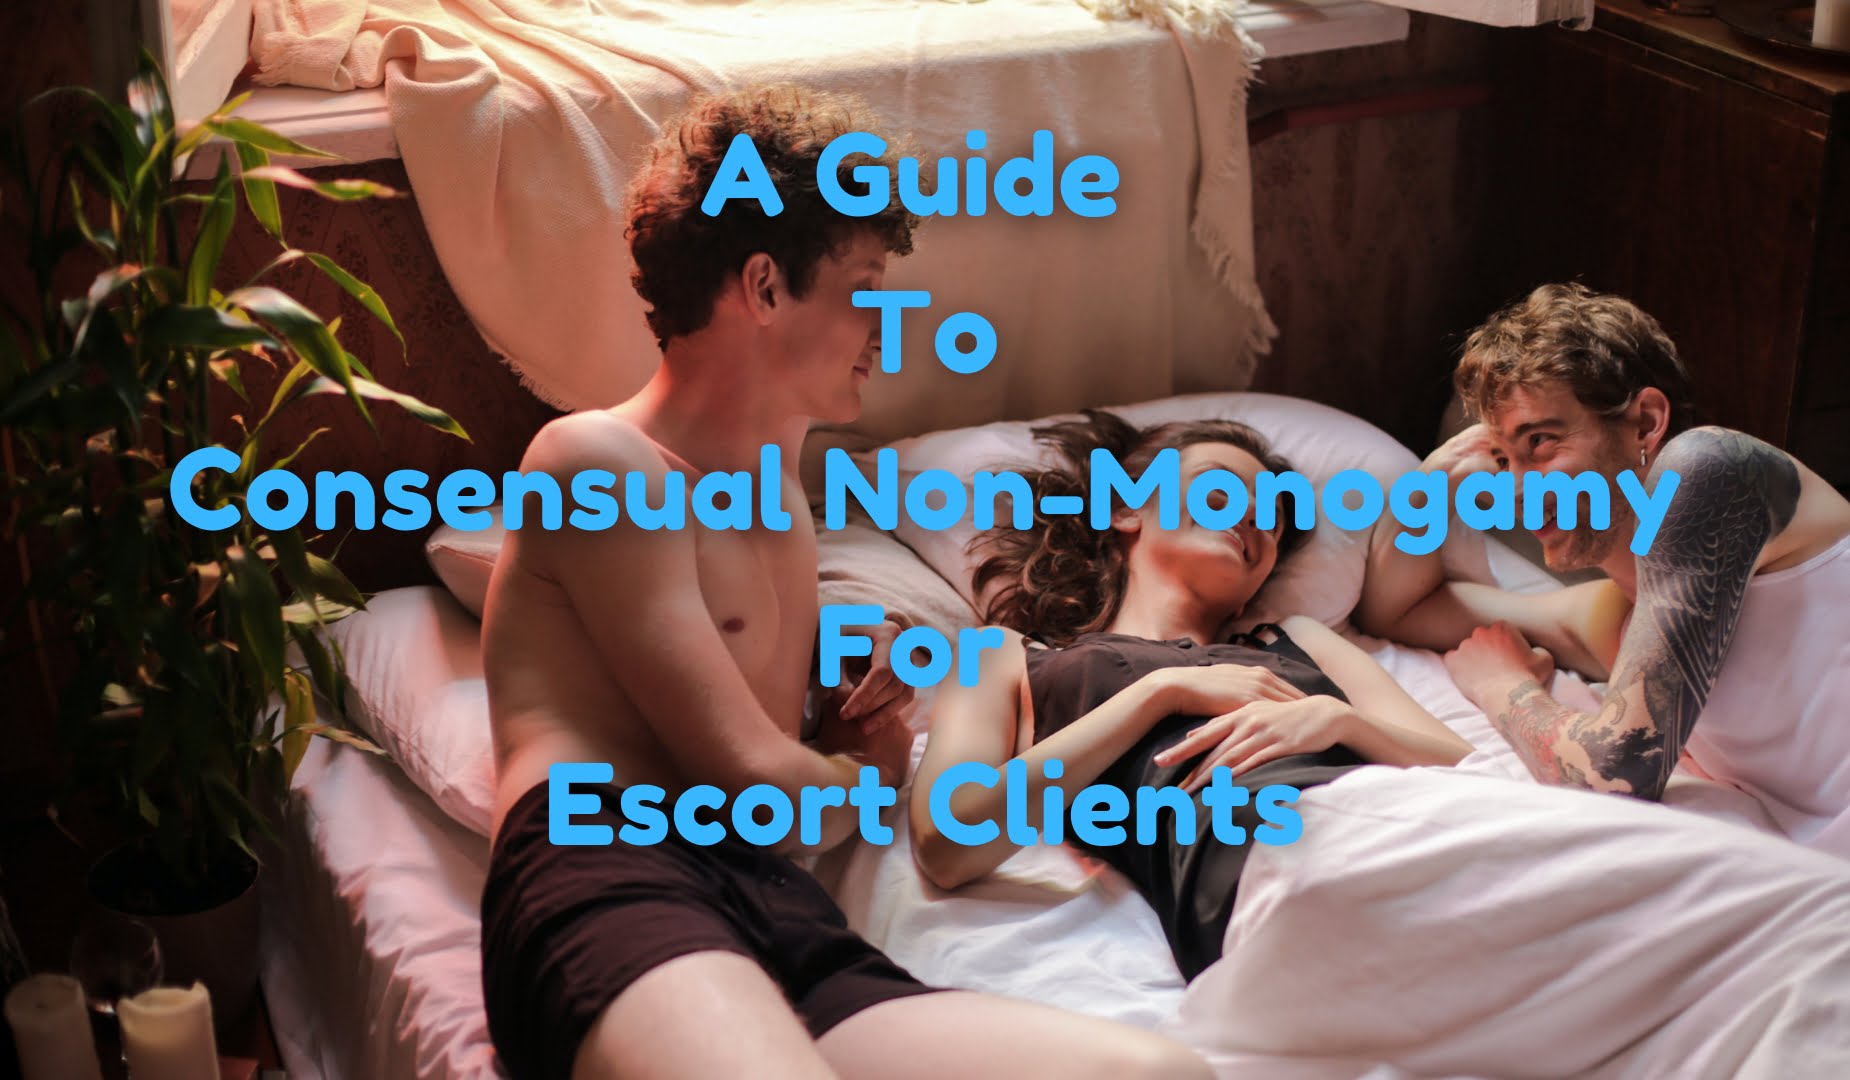 A Guide To Consensual Non-Monogamy For Escort Clients